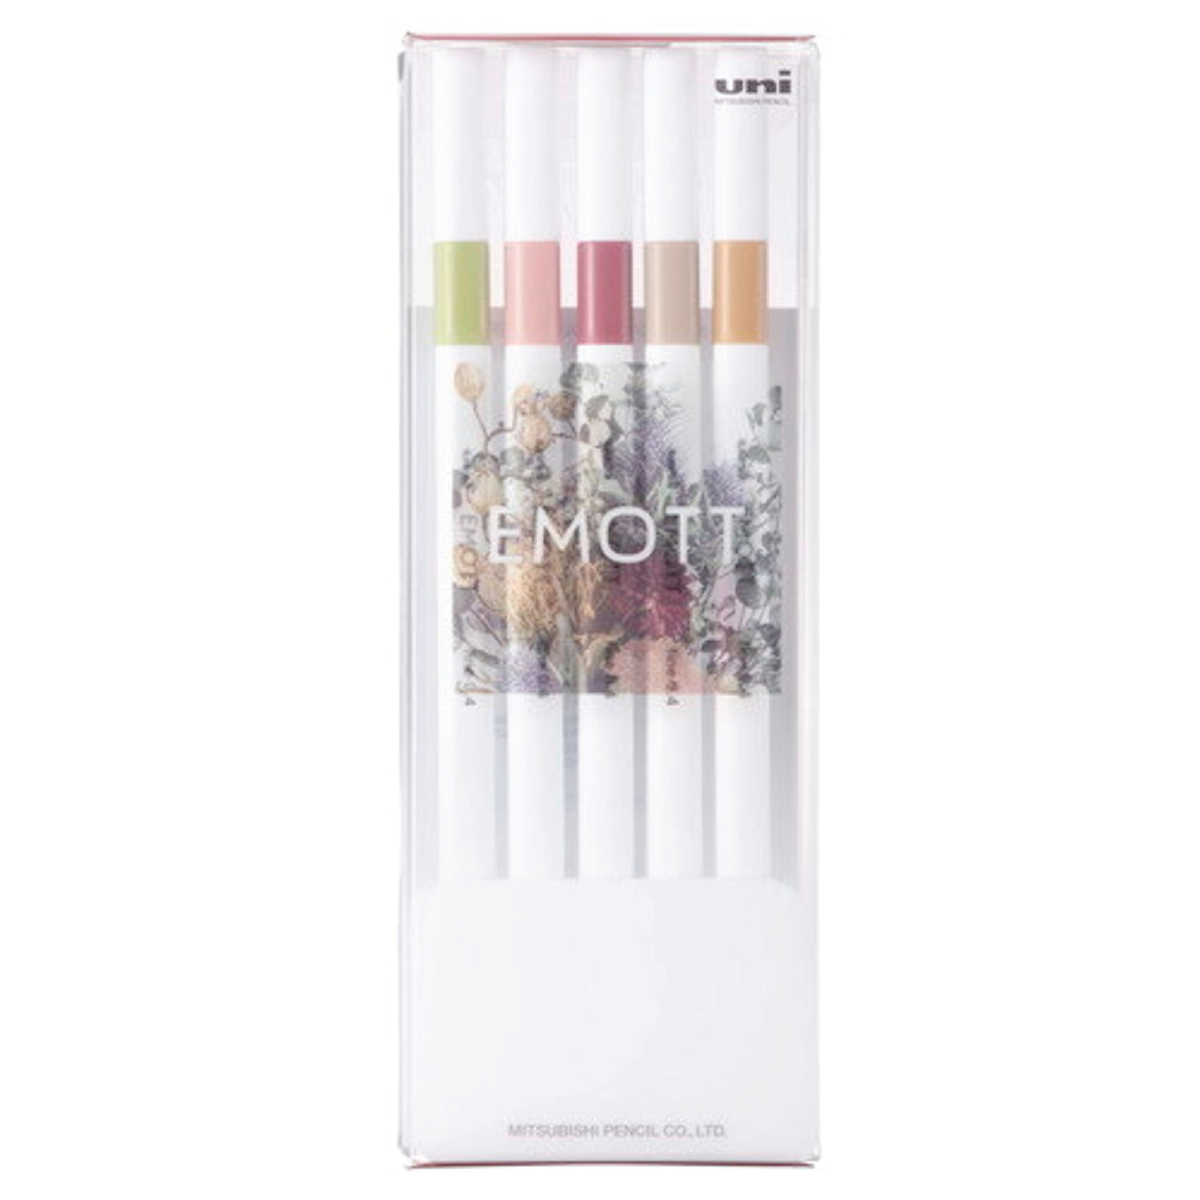 emott Fineliner Pen Set Nature Color, 5-Colors